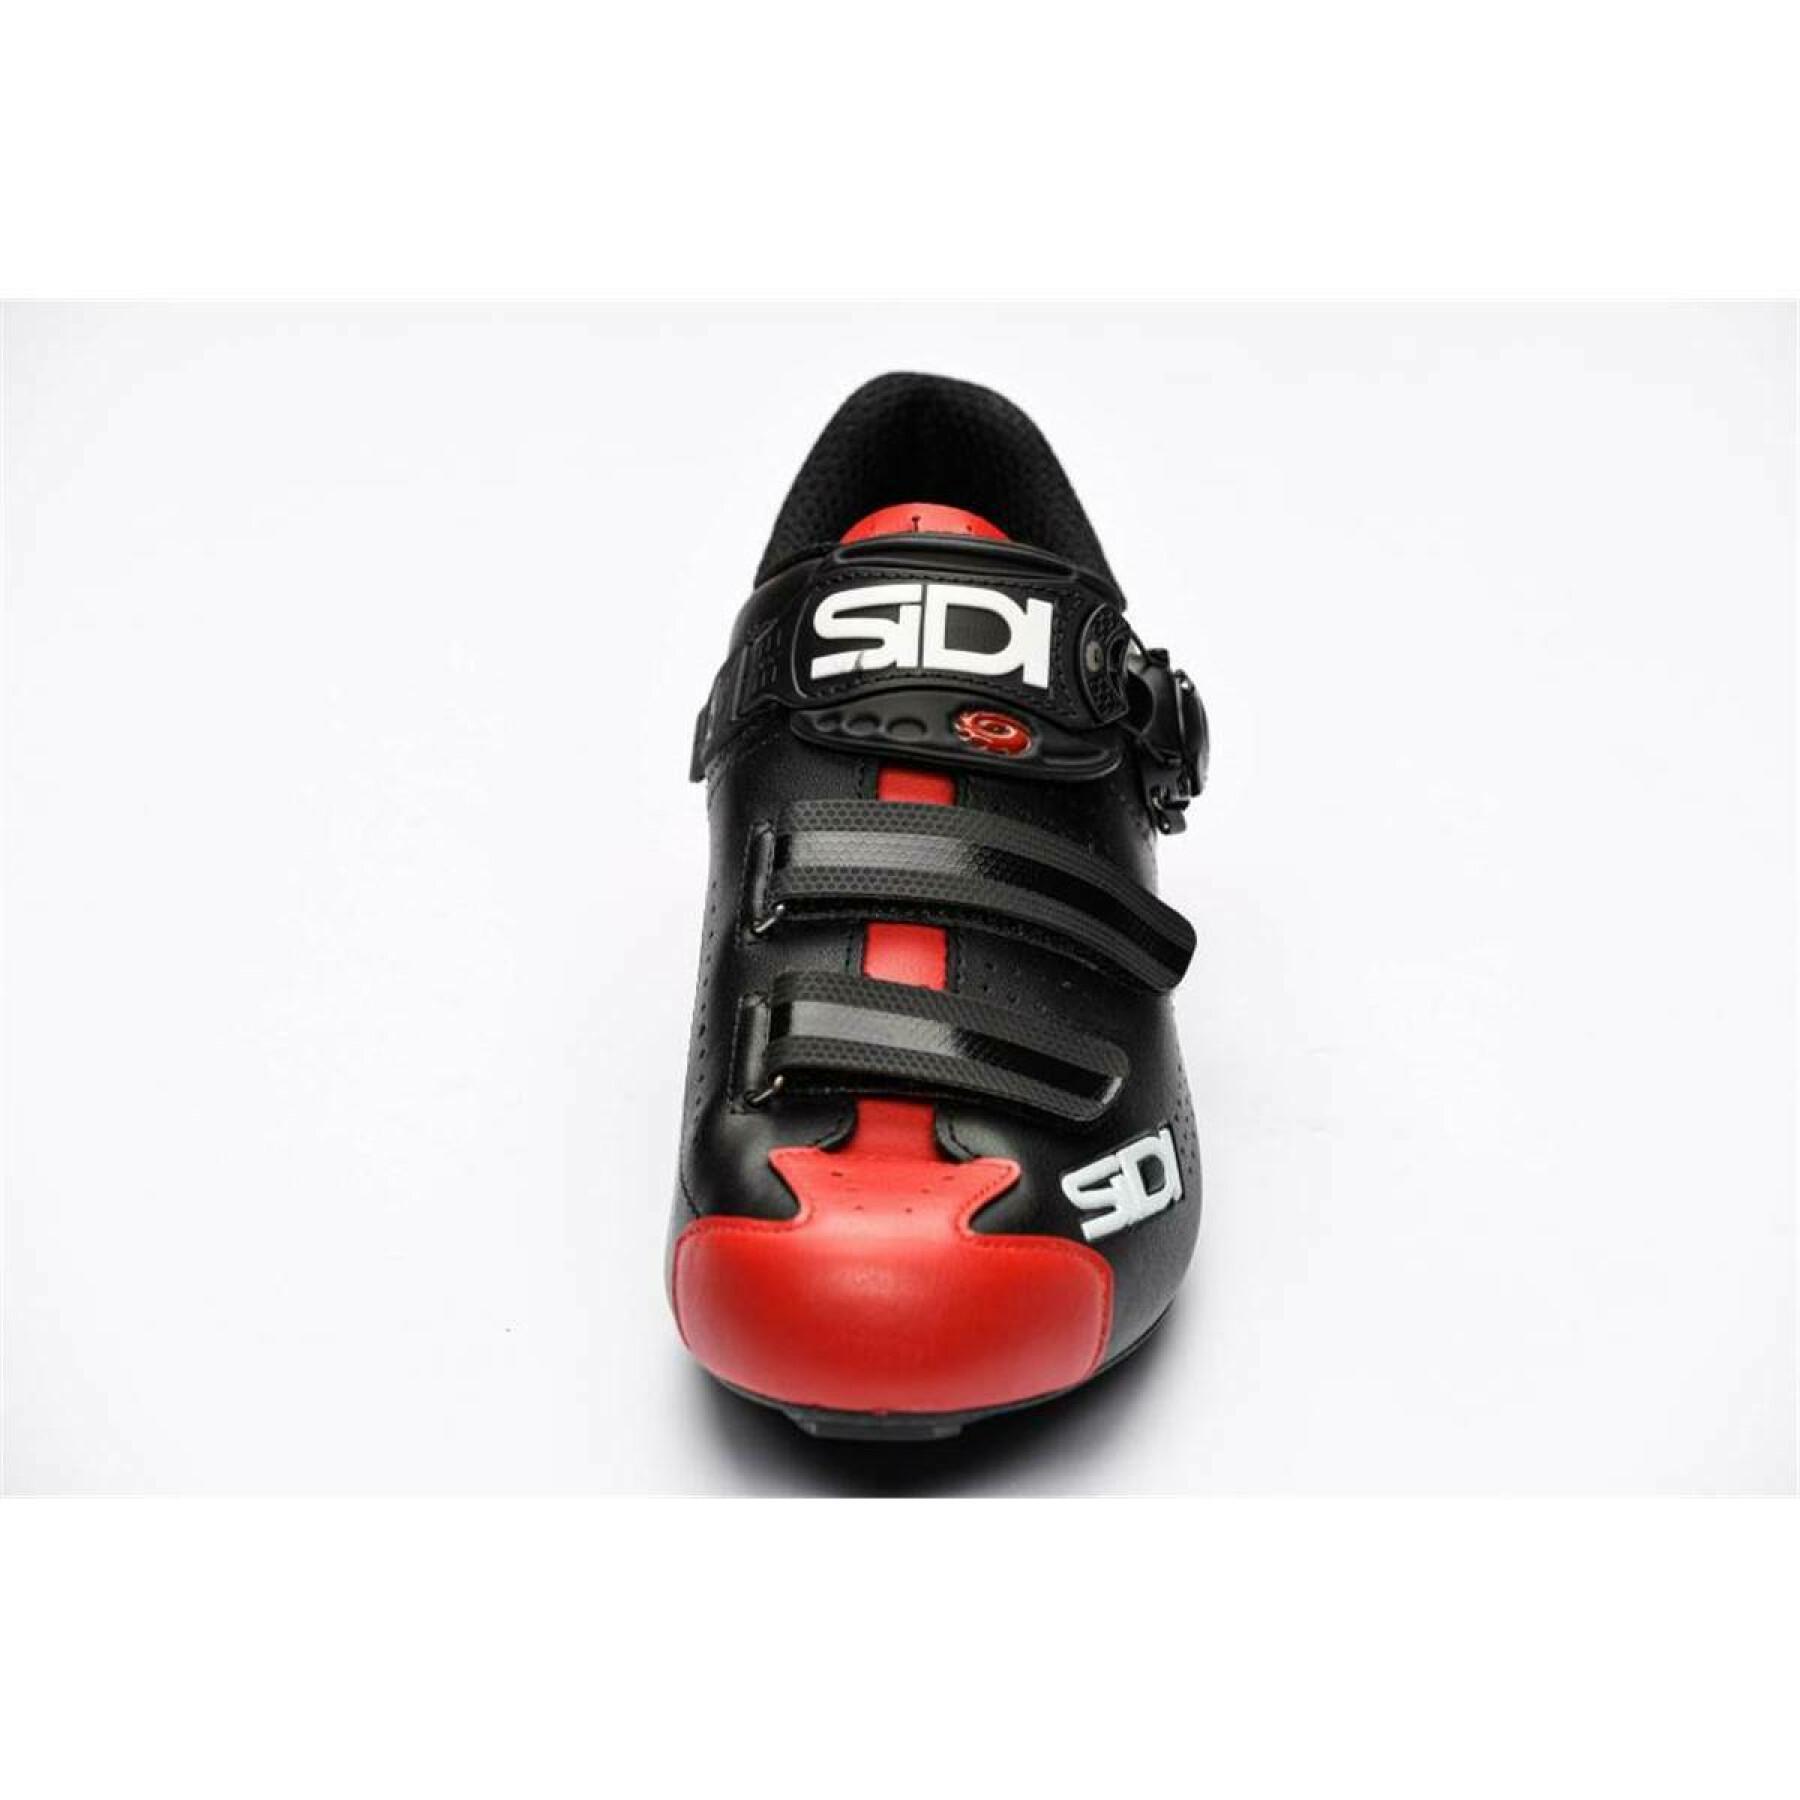 Sapatos Sidi Alba 2